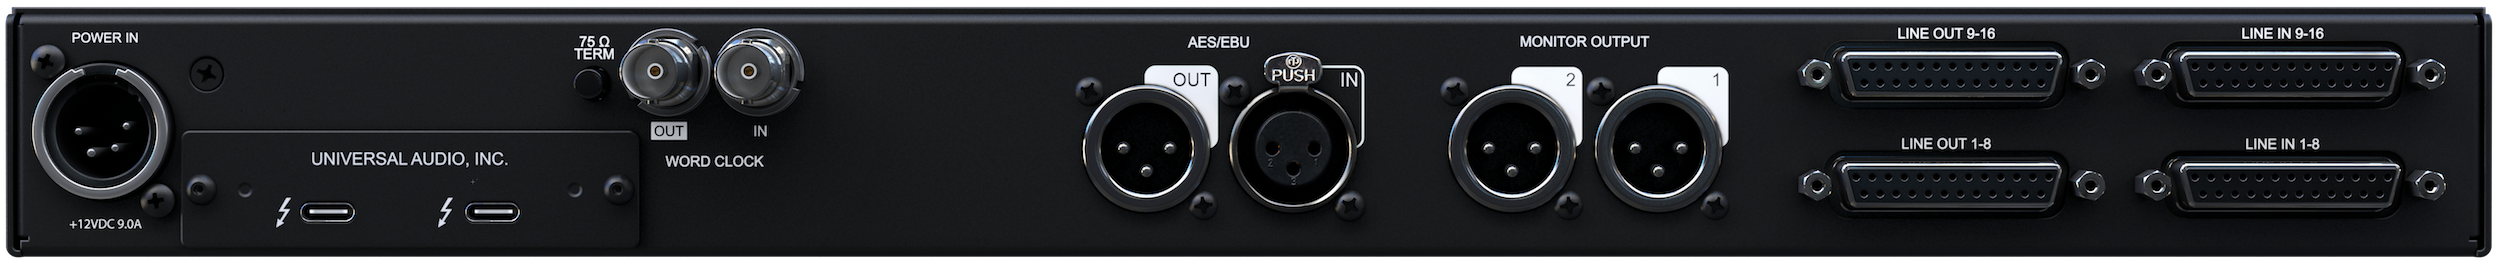 Universal Audio Apollo X16 - Thunderbolt audio interface - Variation 2